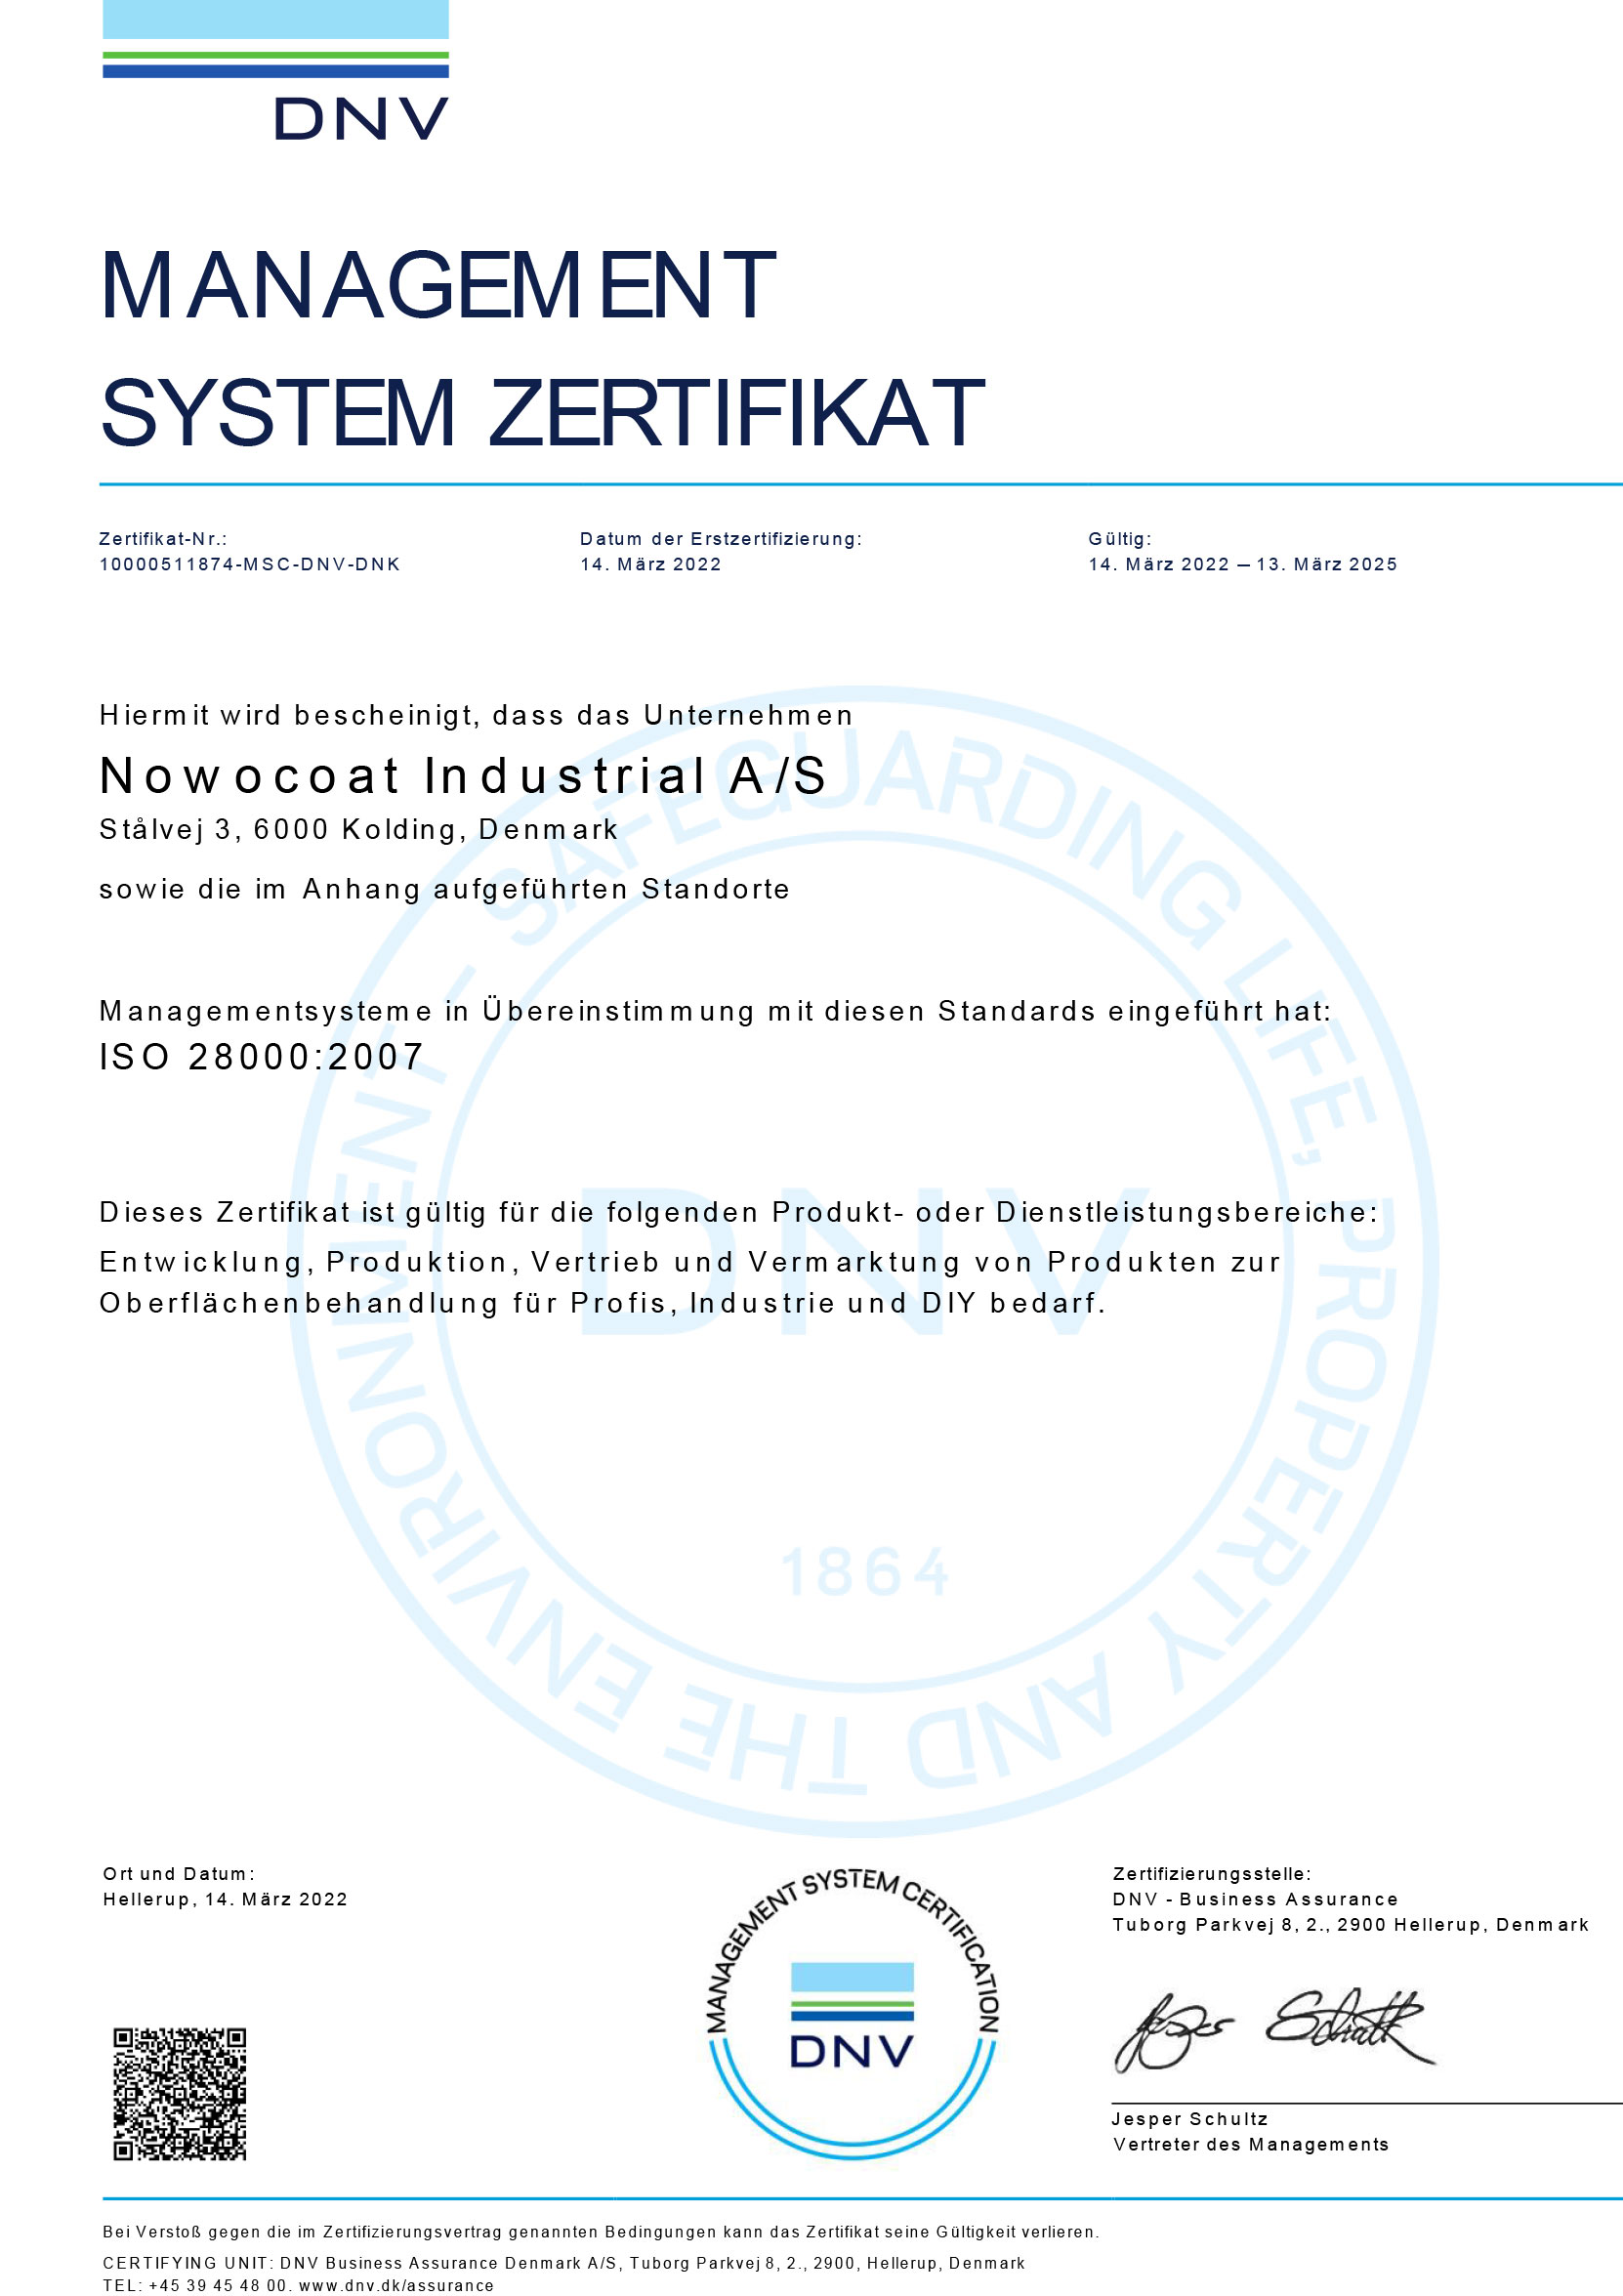 ISO 9001 14001 176132 2015 AQ DEN DANAK rev 7 GER.pdf 20210406 1617722387026